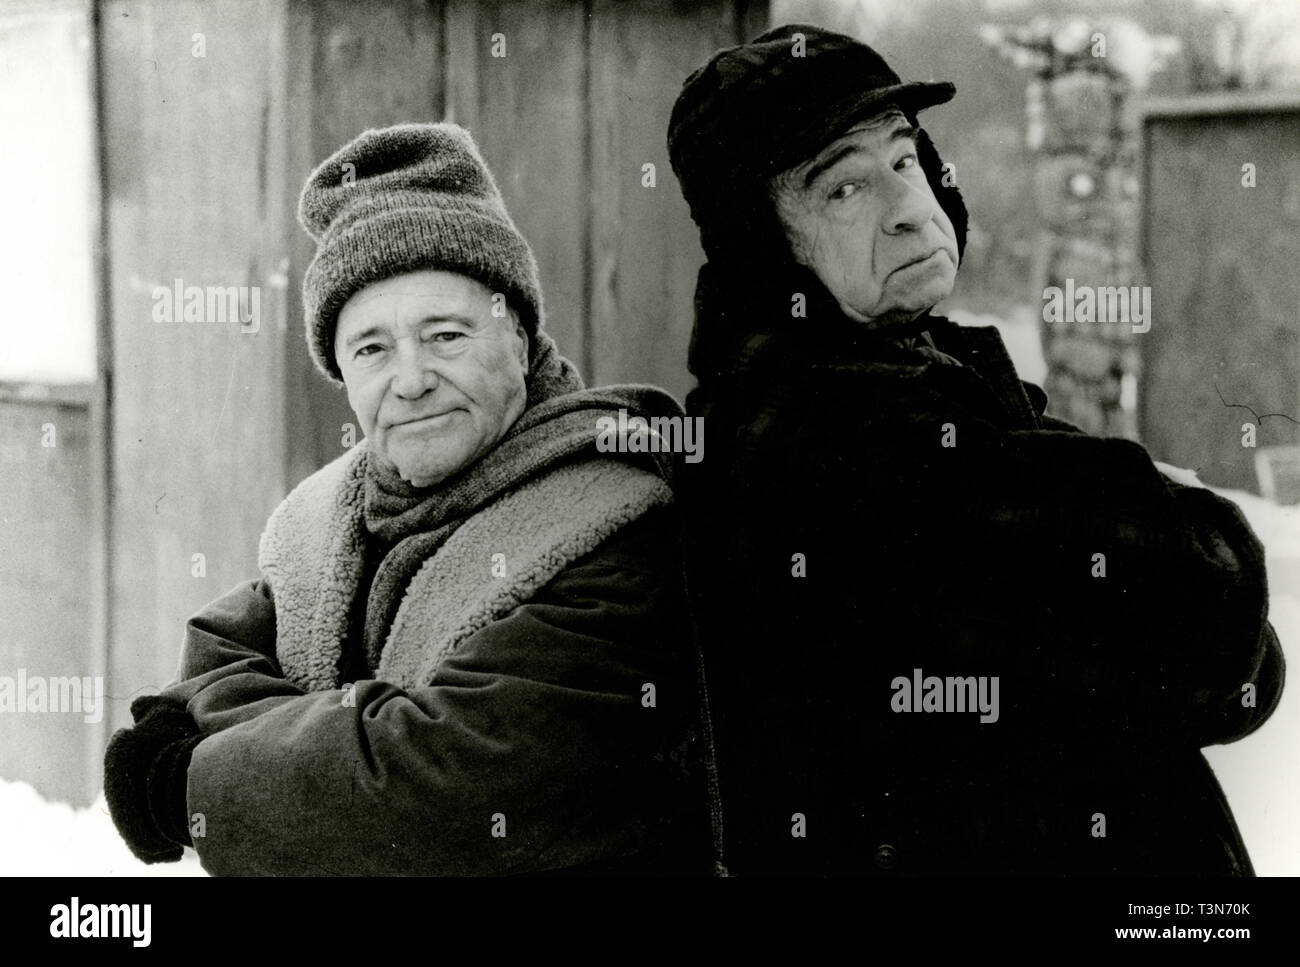 Jack Lemmon and Walter Matthau in the movie Grumpy Old Men, 1993 Stock Photo